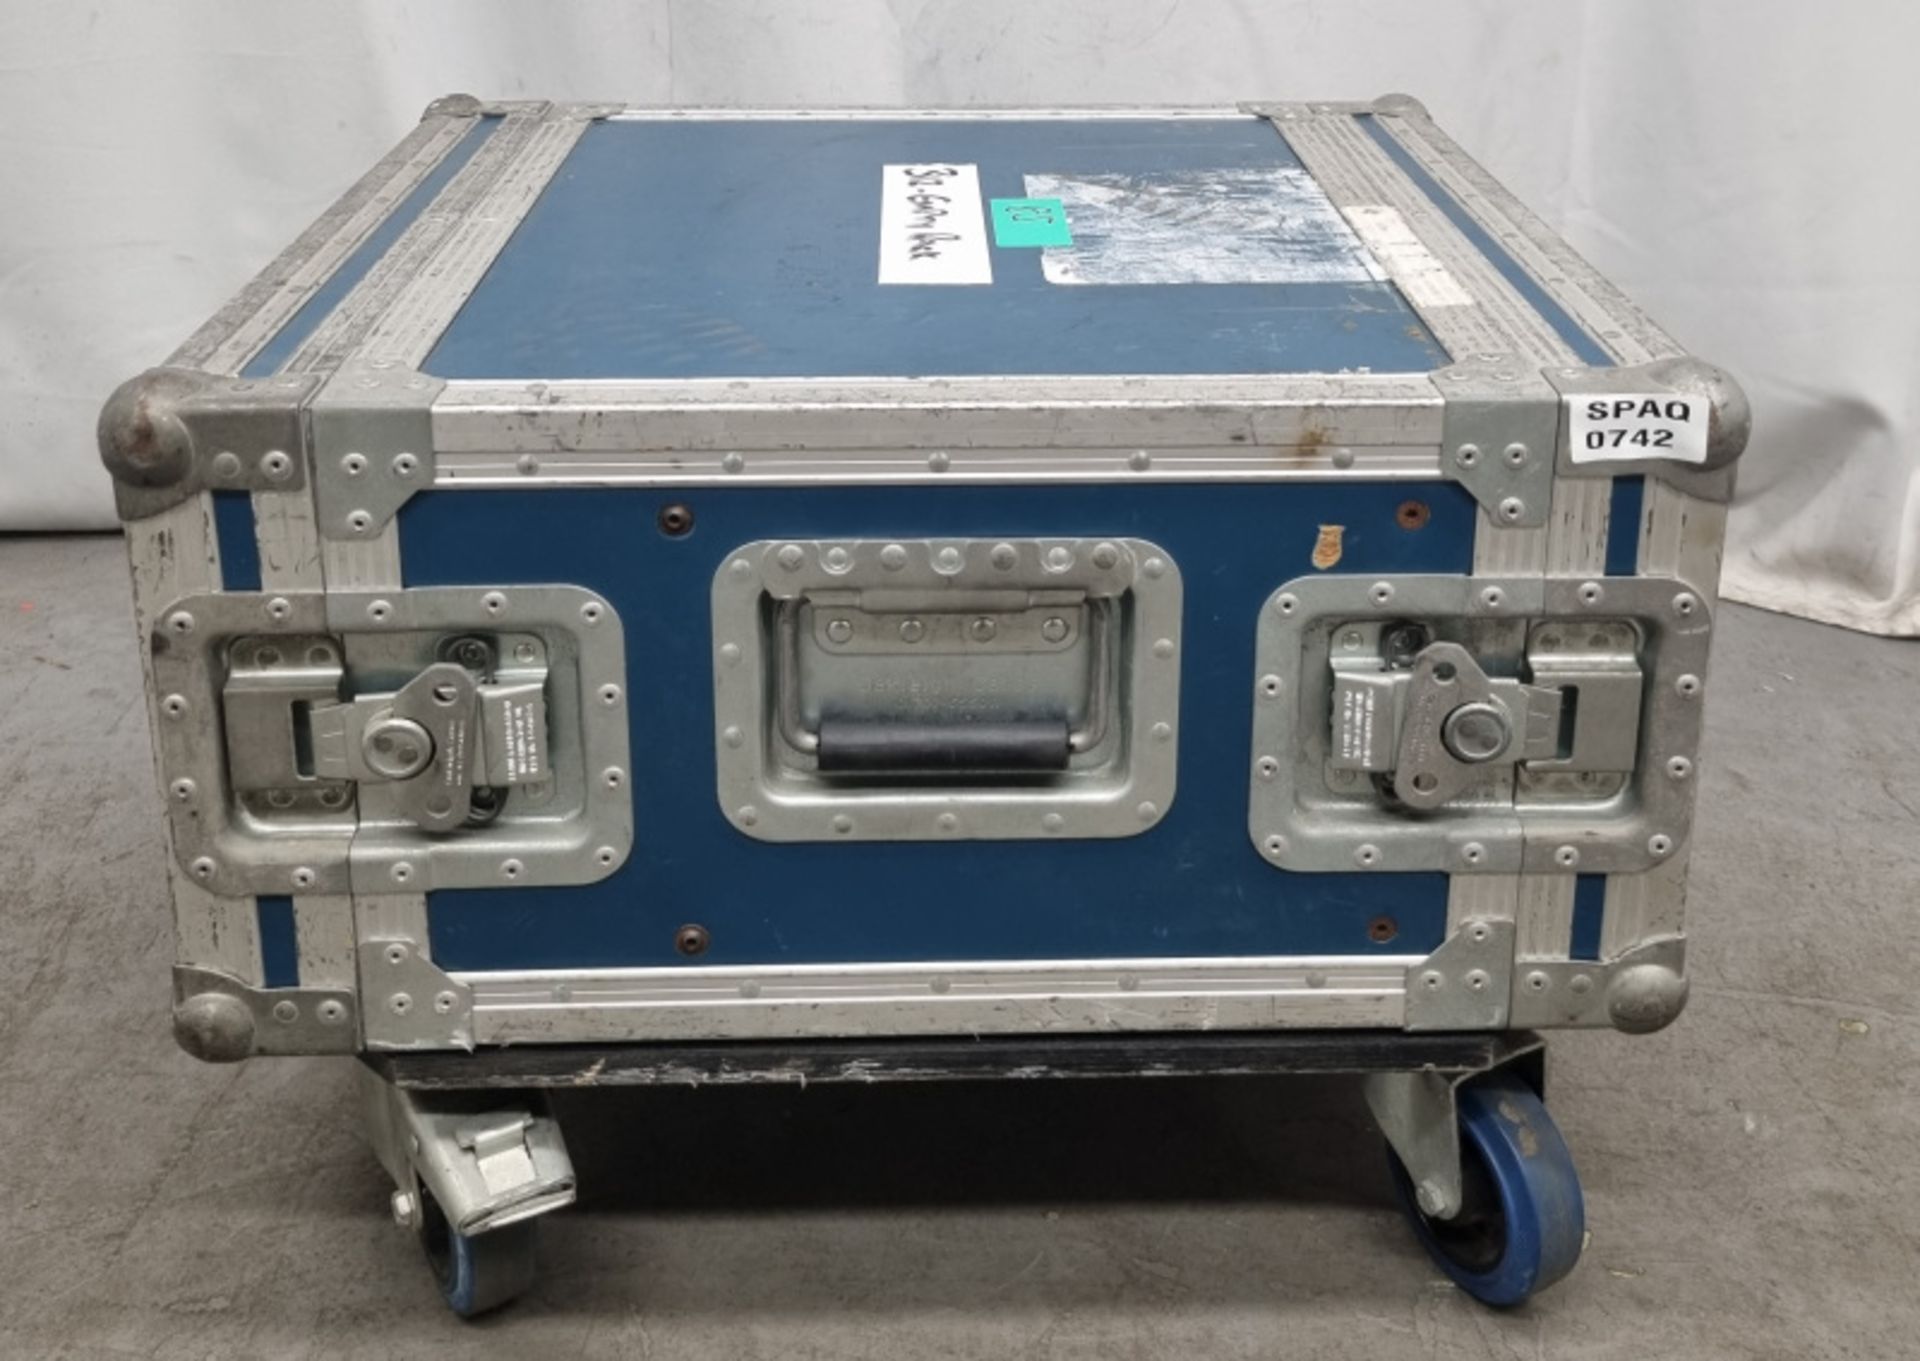 Empty Wheeled Flight case with internal rack - Dimensions L53.5 x W60 x H43cm (including wheels)